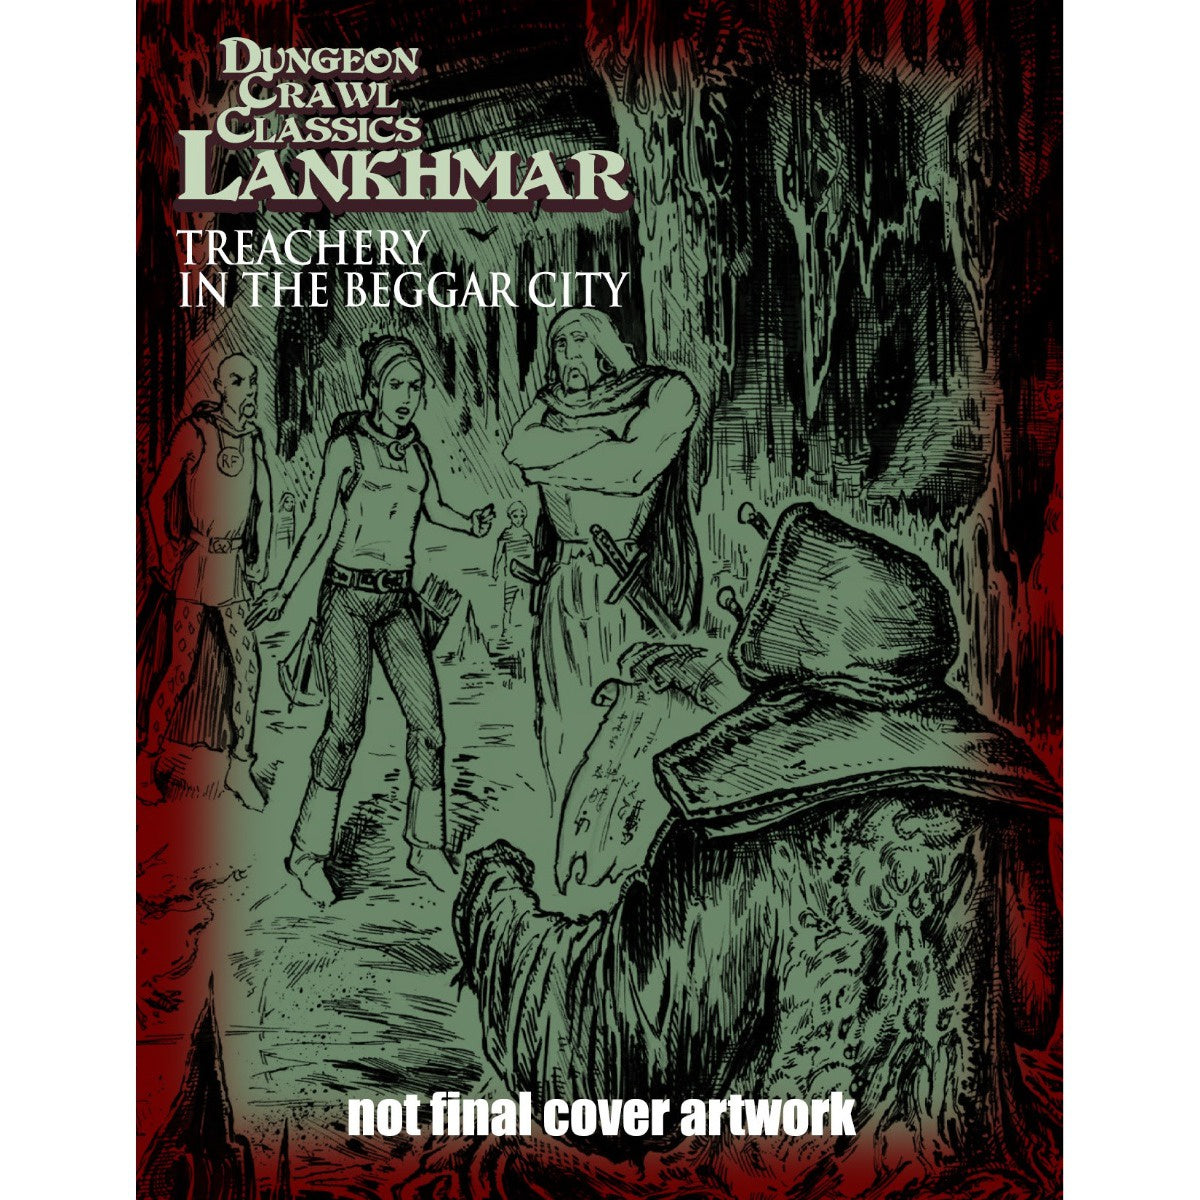 Dungeon Crawl Classics Lankhmar 13 - Treachery in the Beggar City